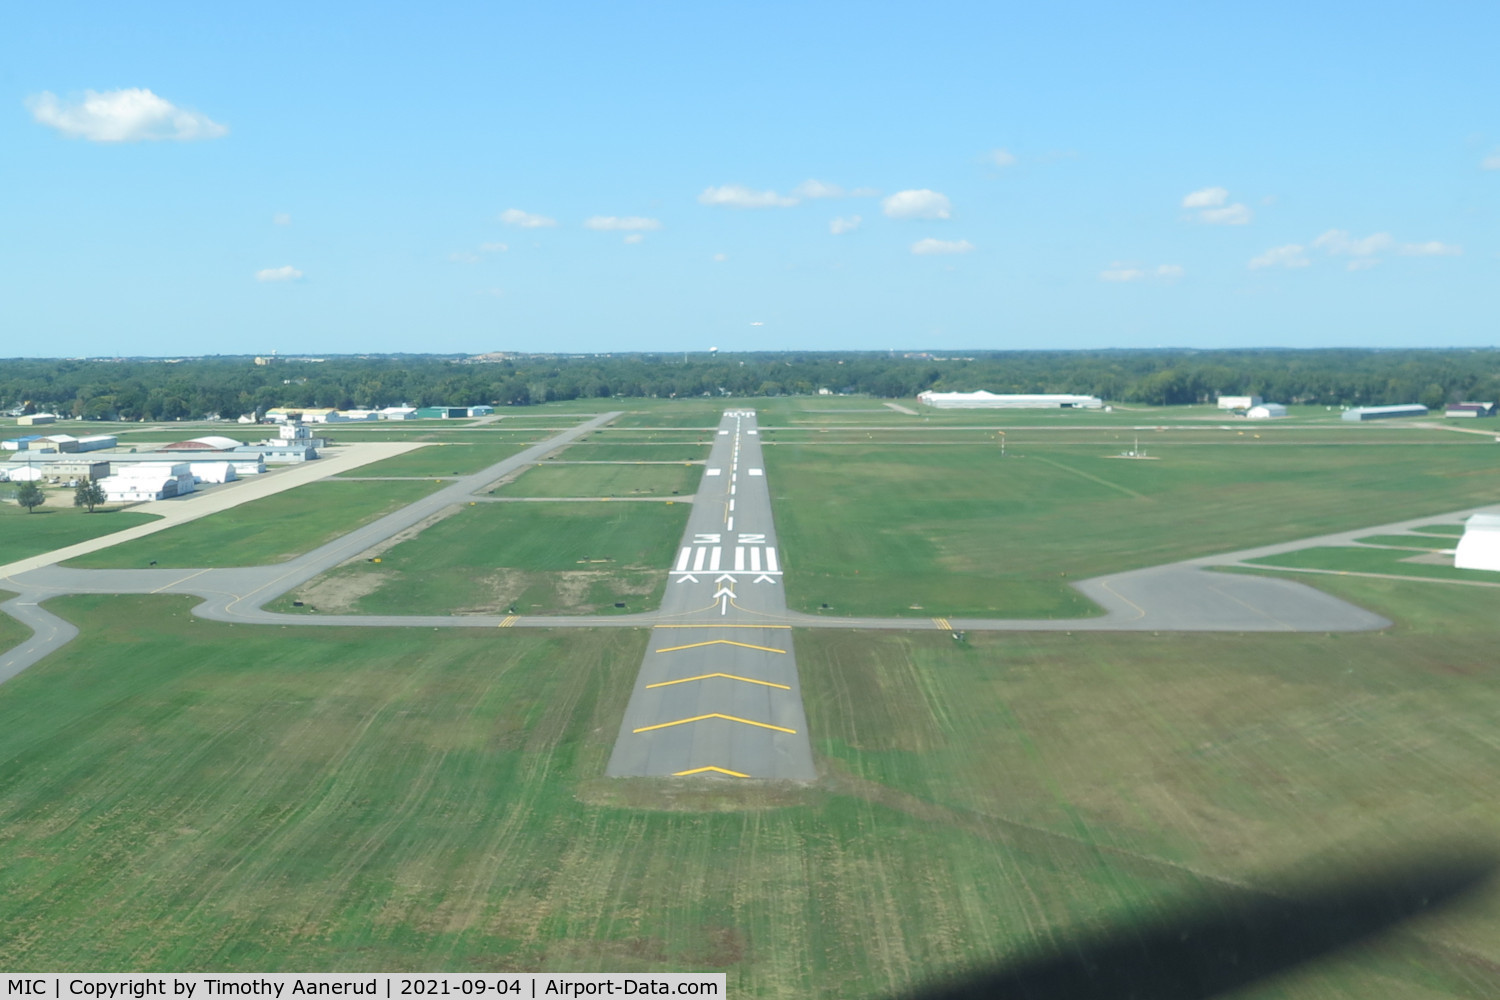 Crystal Airport (MIC) - Crystal airport, Minneapolis MN USA, short final Runway 32.  freshly painted runway stripes